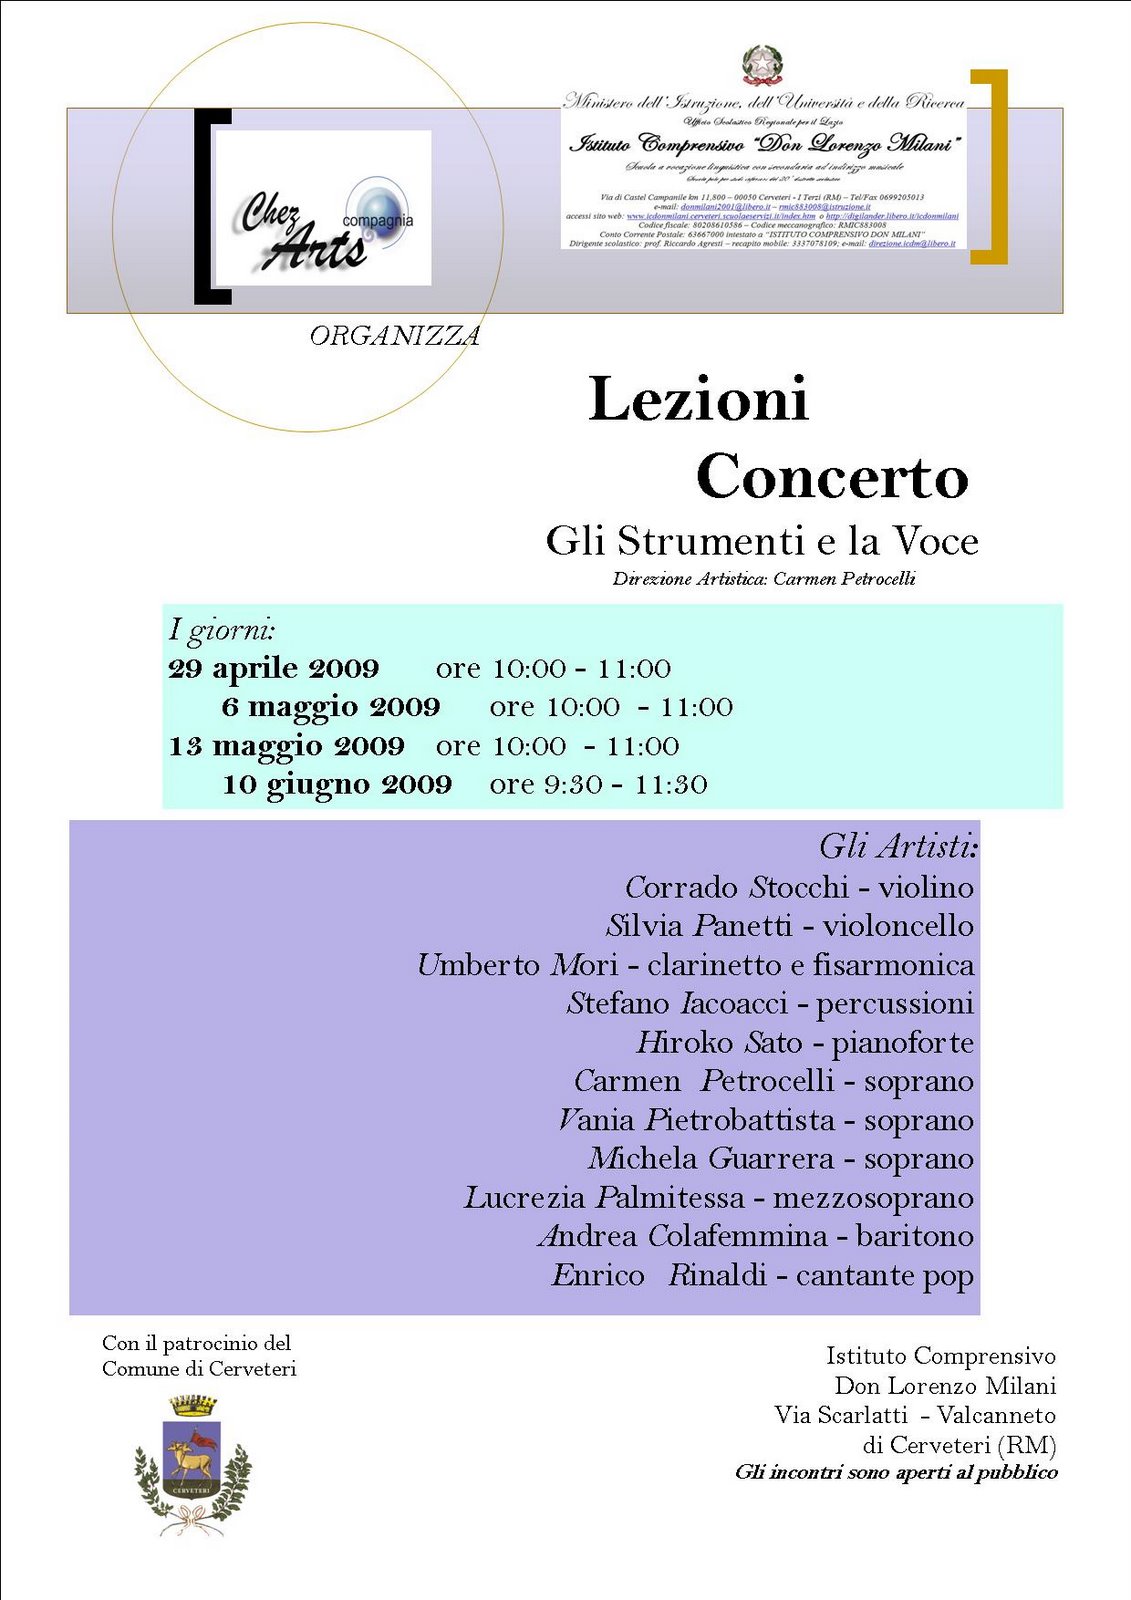 [ChezArts.lezioni+concerto+valcanneto1.jpg]